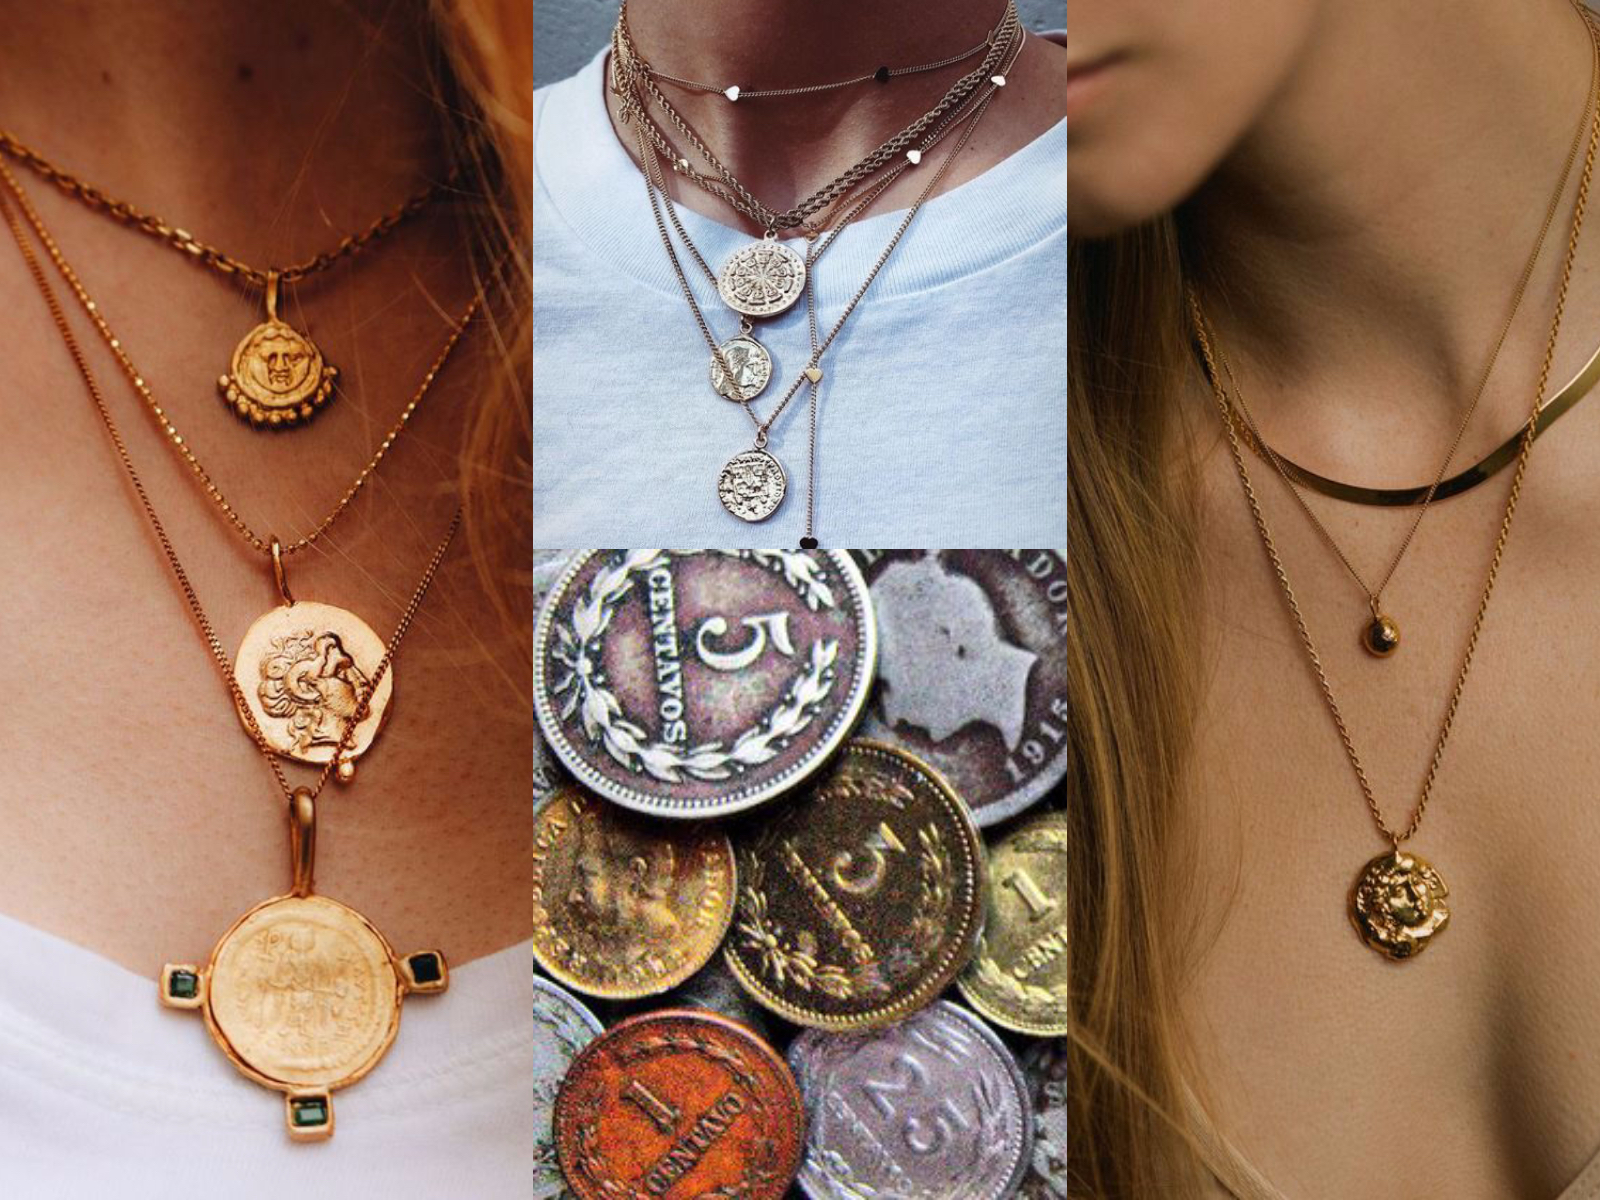 1997 Tunisia 5 Milliemes ~ Vintage Coin Chain Necklace Pendant ~ Handmade Sustainable Jewellery ~ World Travel Charm ~ Unusual Birthday Gift